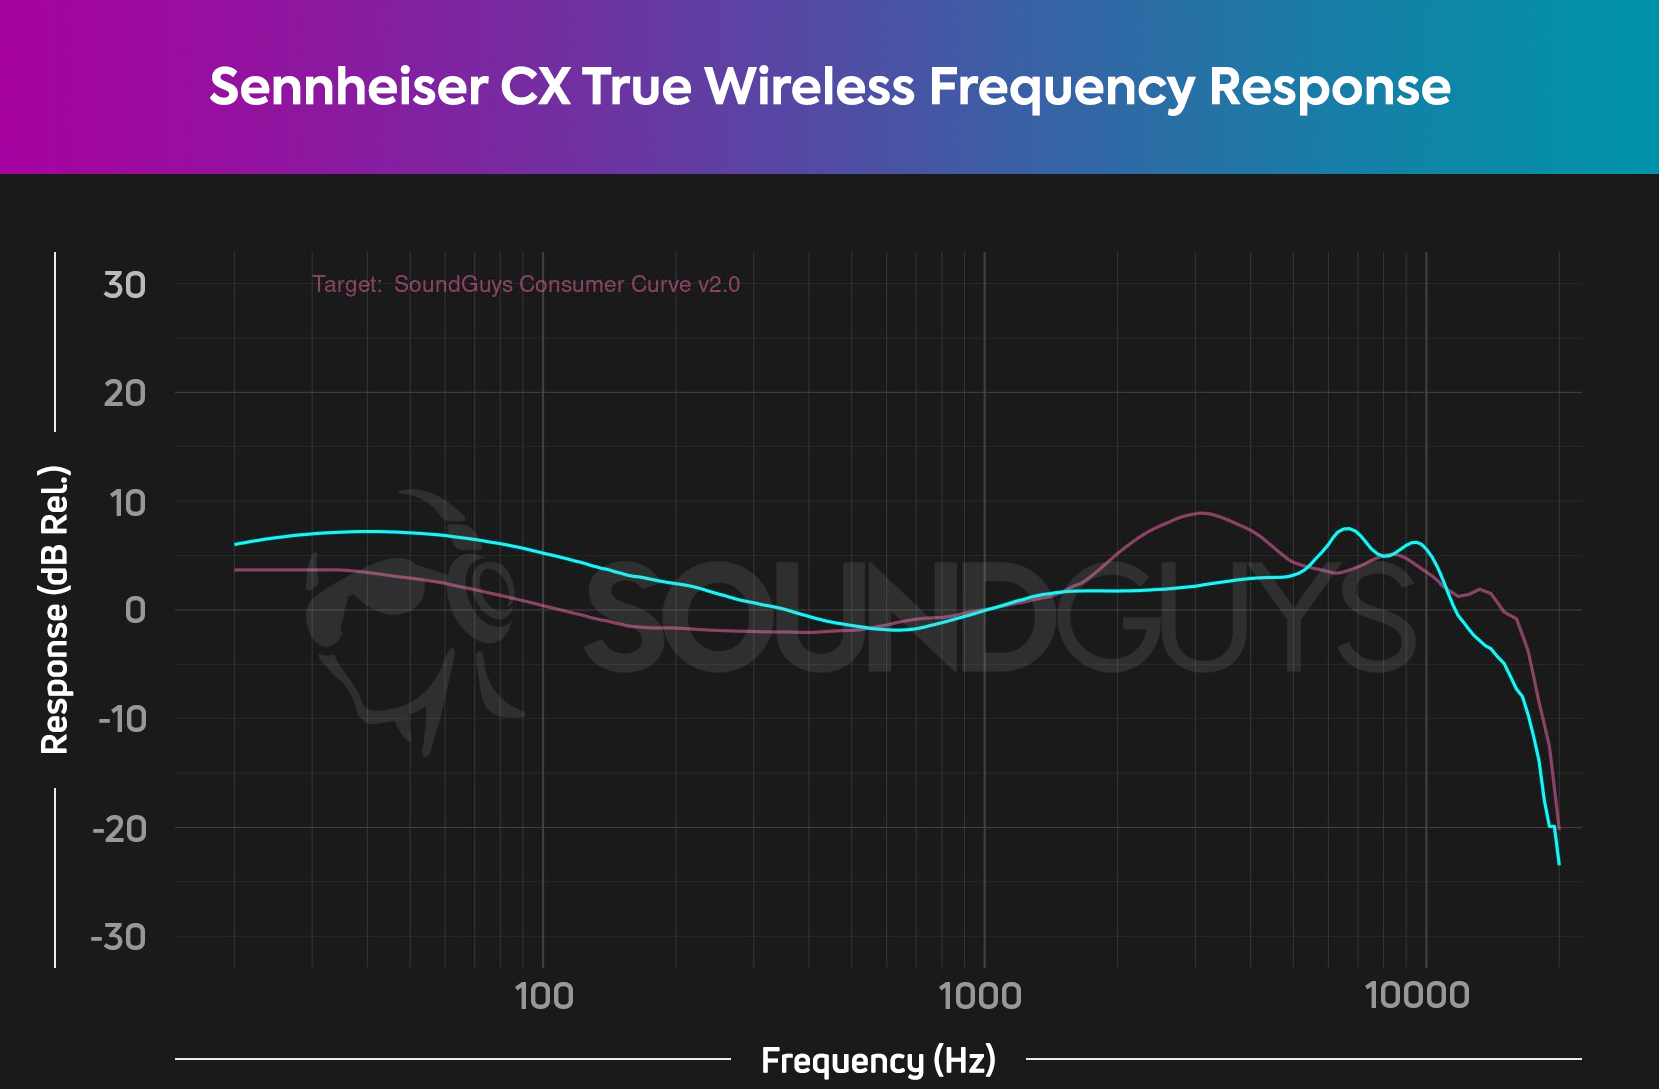 Sennheiser CX True Wireless frequency response chart.